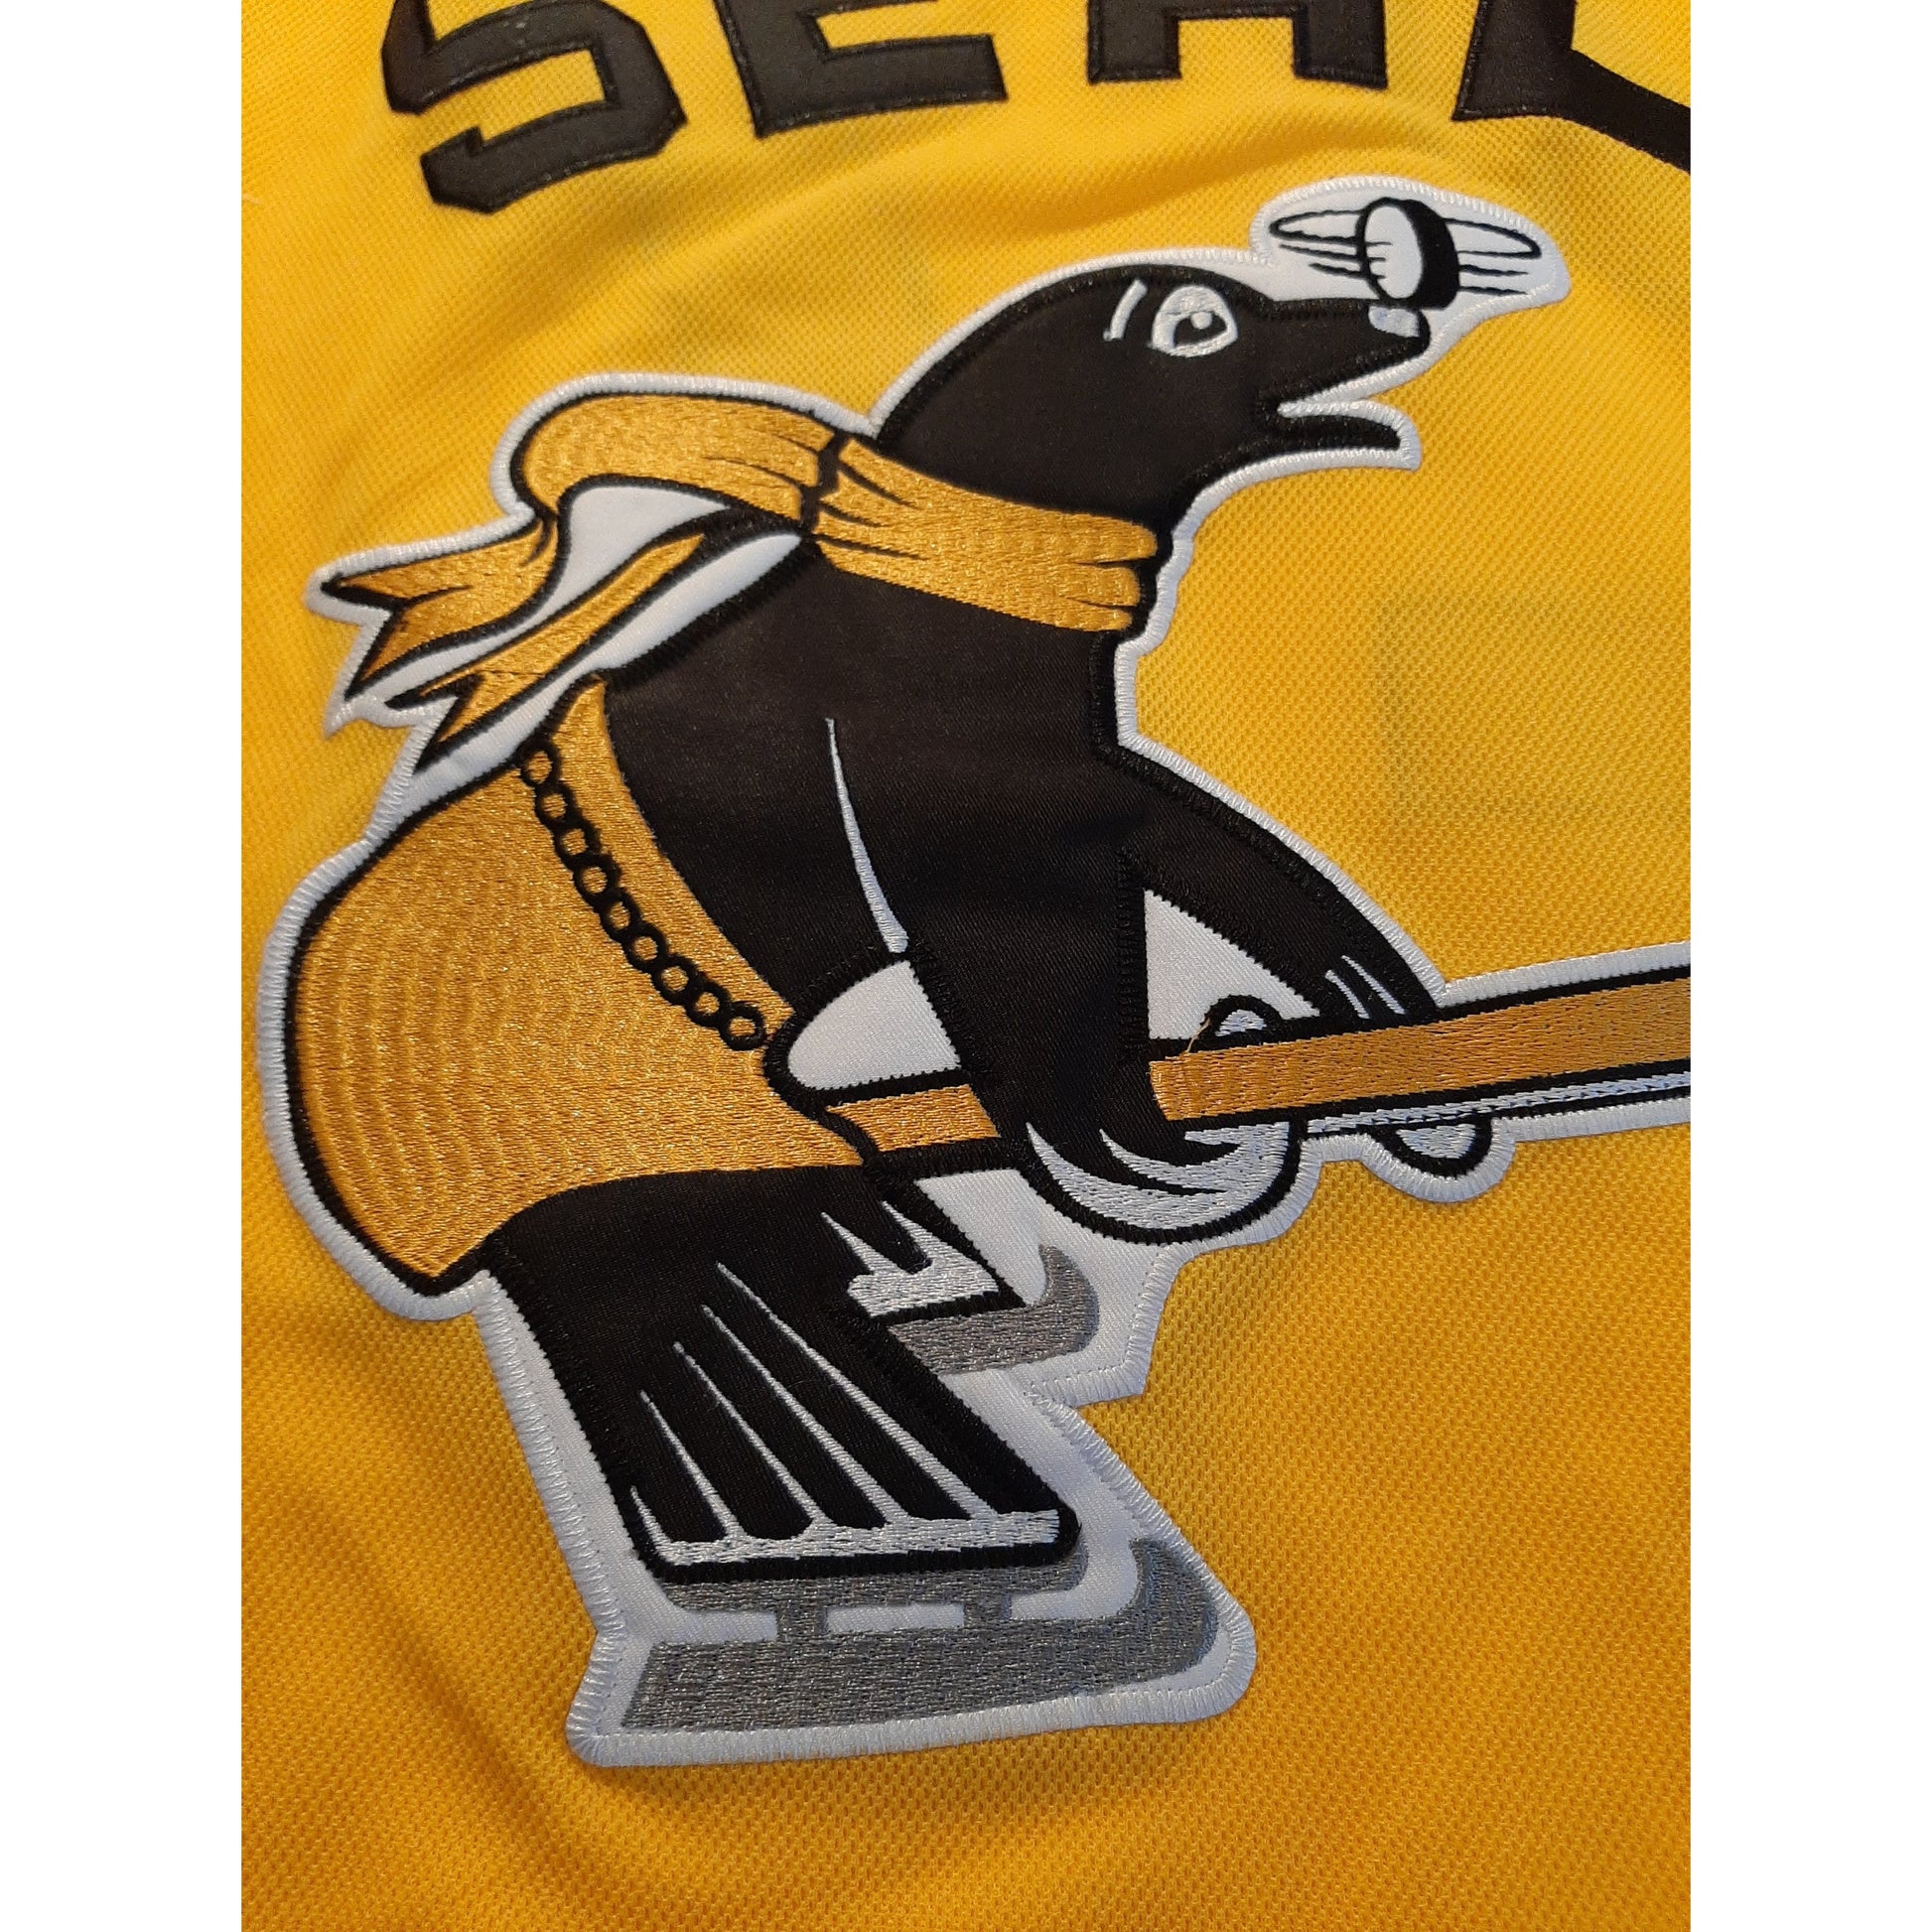 San Francisco Seals Hockey Jersey - White - Small - Royal Retros